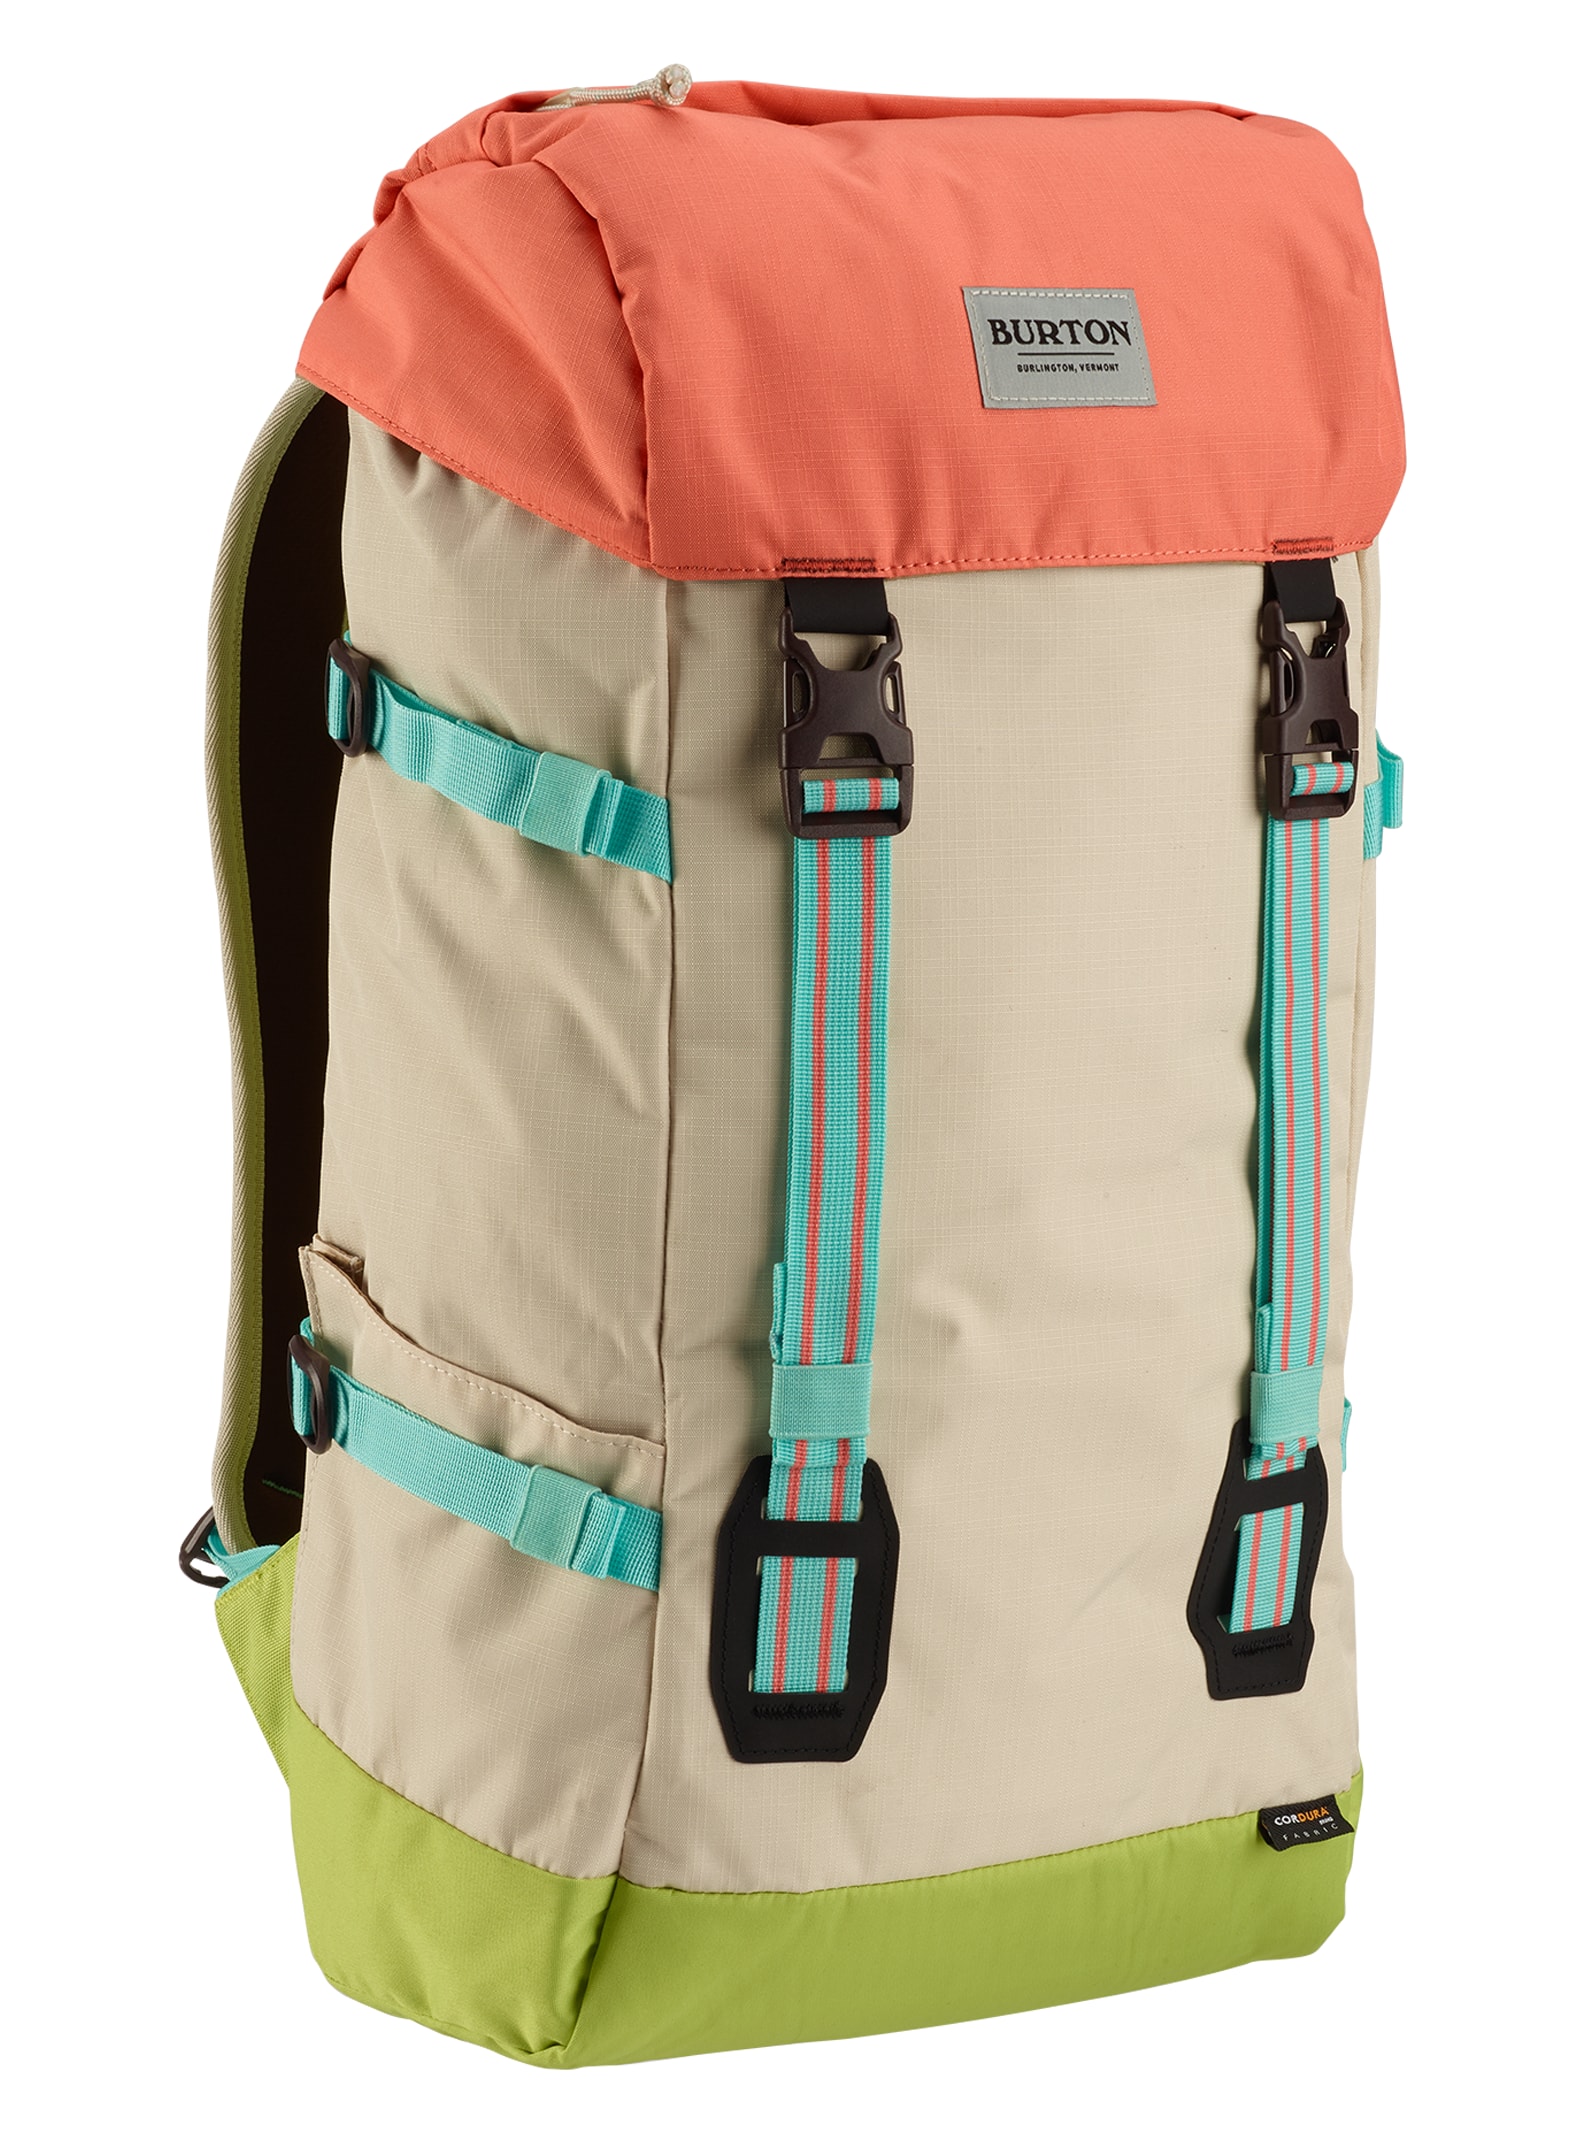 Burton Tinder 2.0 30L Backpack | Burton.com Spring 2020 US